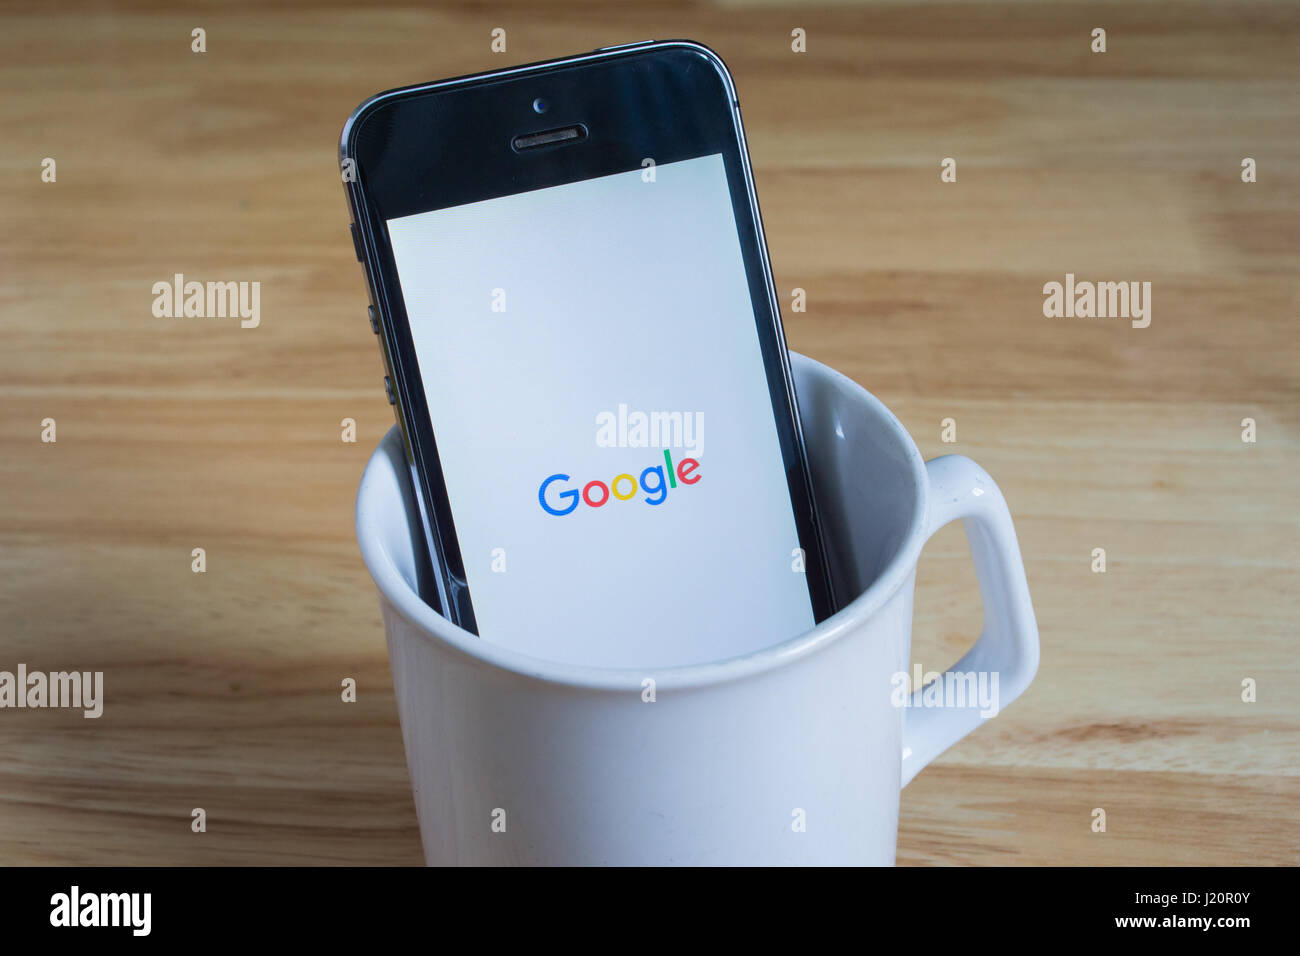 Bangkok, Thailand - April 22, 2017 : Apple iPhone5s in a mug showing its screen with Google logo. Stock Photo